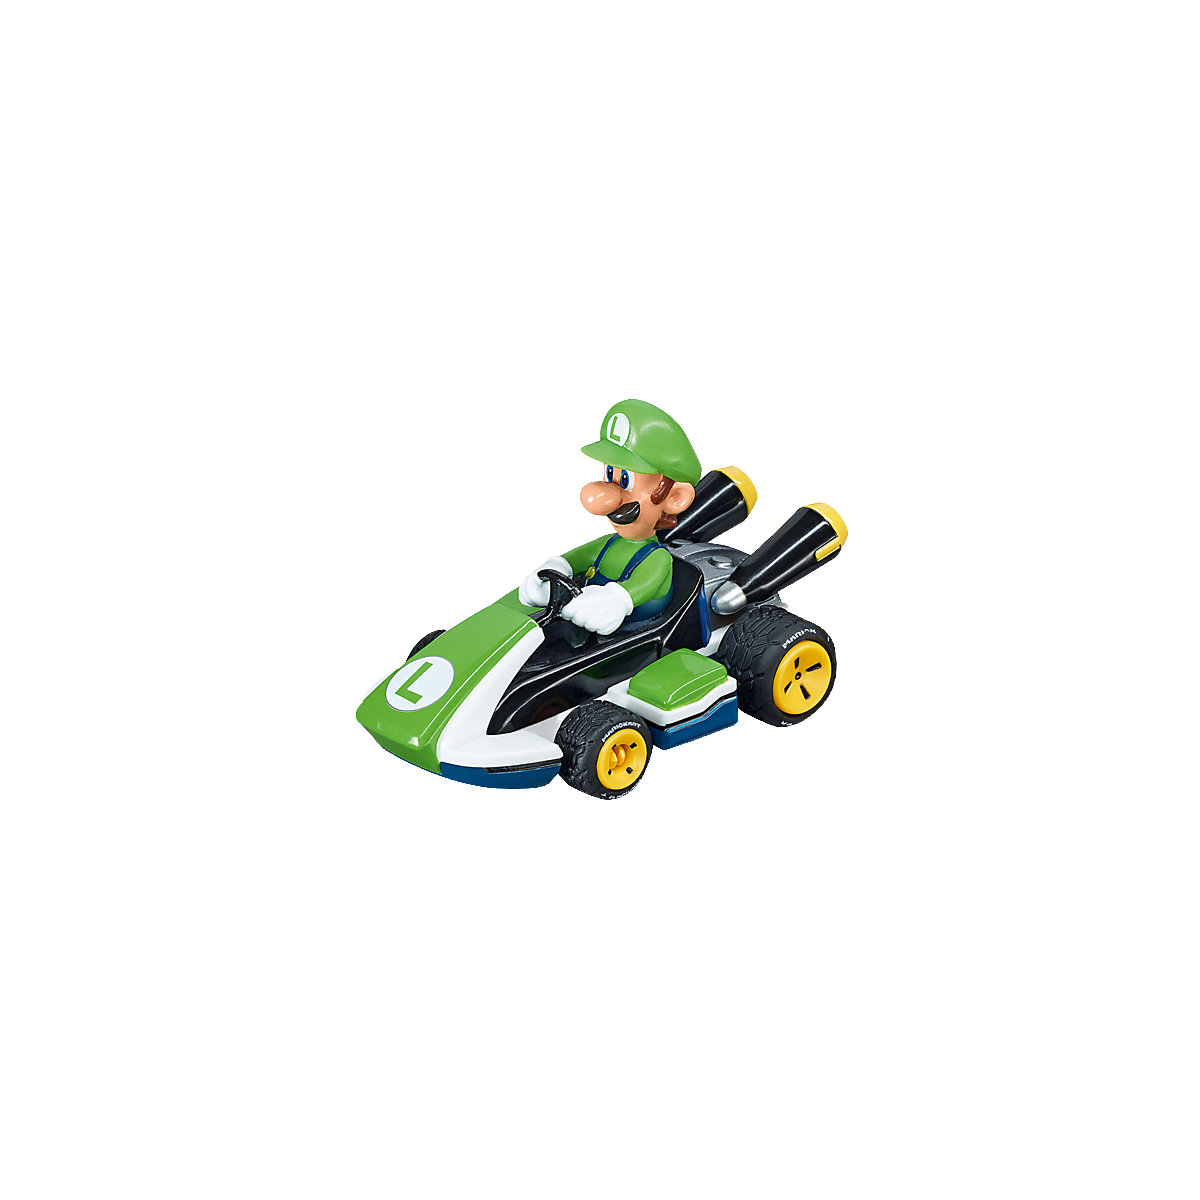 CARRERA GO!!! Slot Car 64034 Nintendo Mario Kart™ 8 Luigi